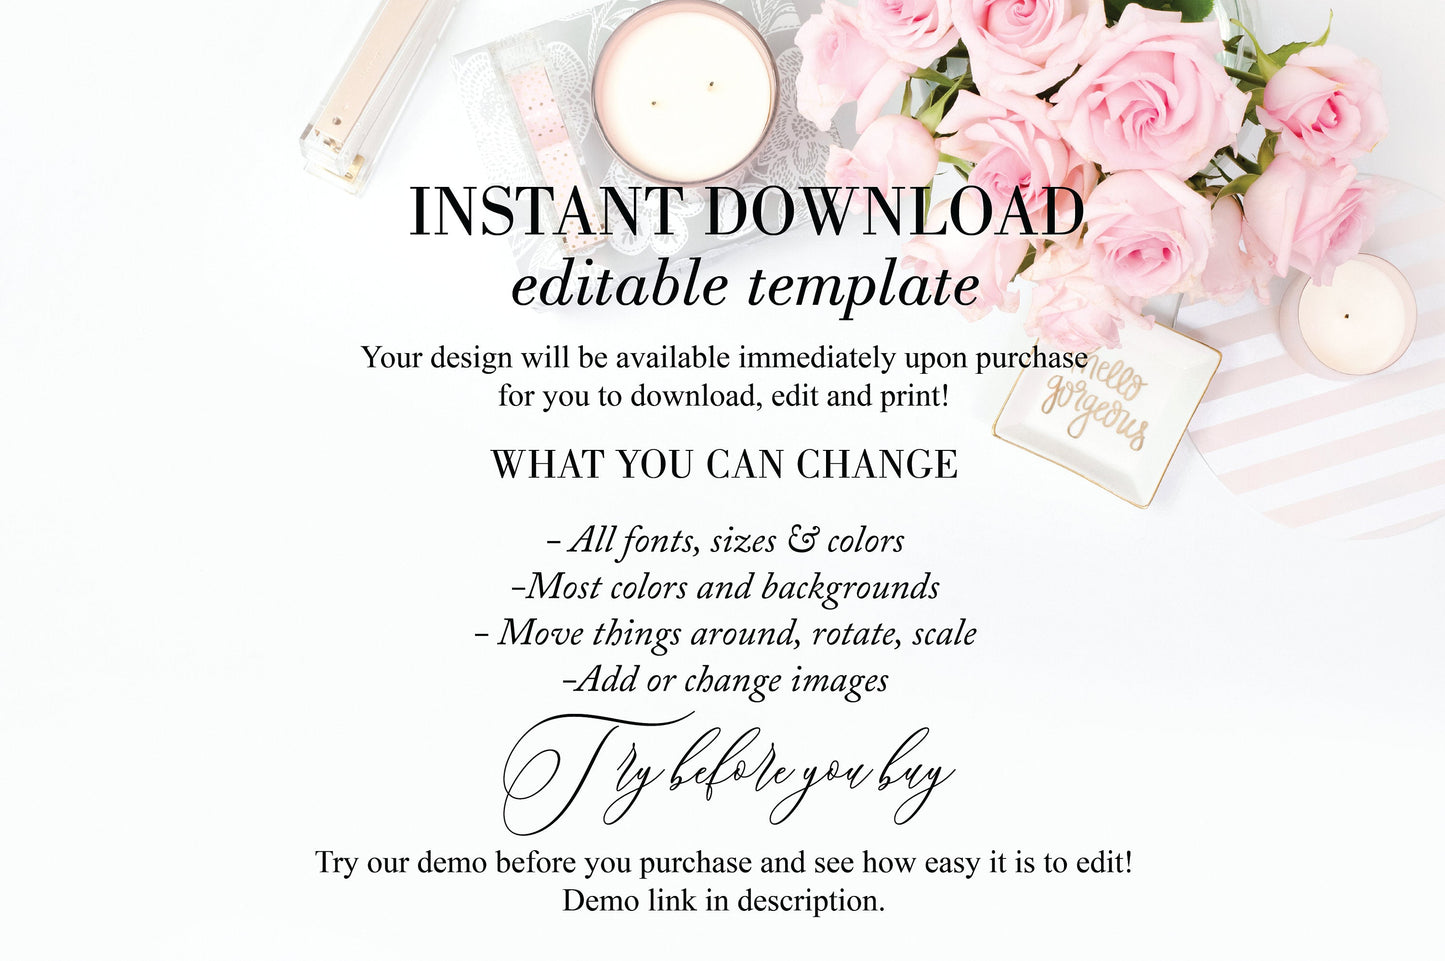 Wedding Invitation Editable Template, Printable DIY Instant Download Invites, Digital Download Invitations 100% Editable -Joss WEDDING INVITATIONS SAVVY PAPER CO